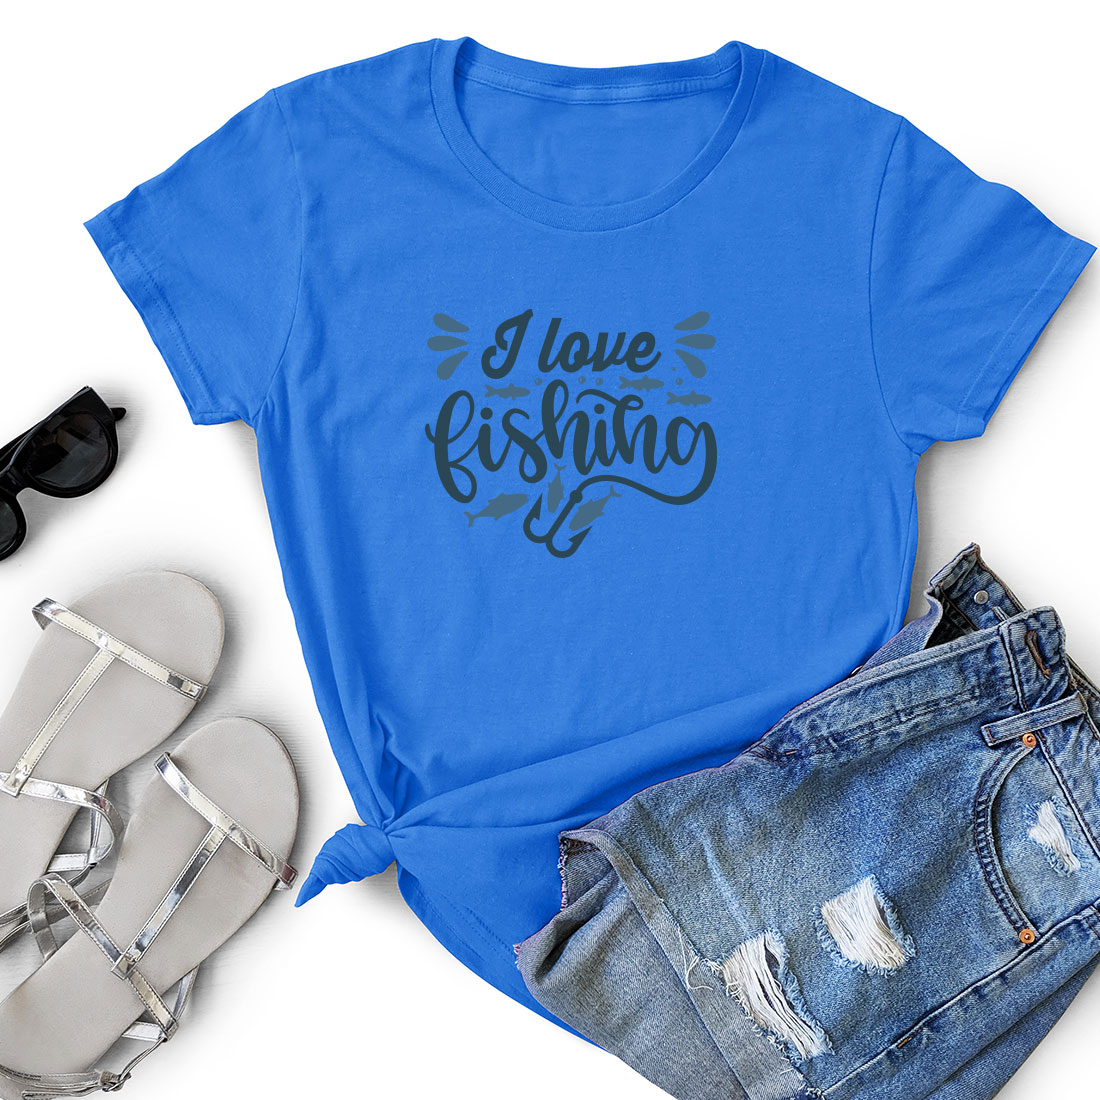 T - shirt that says i love fishing on it.